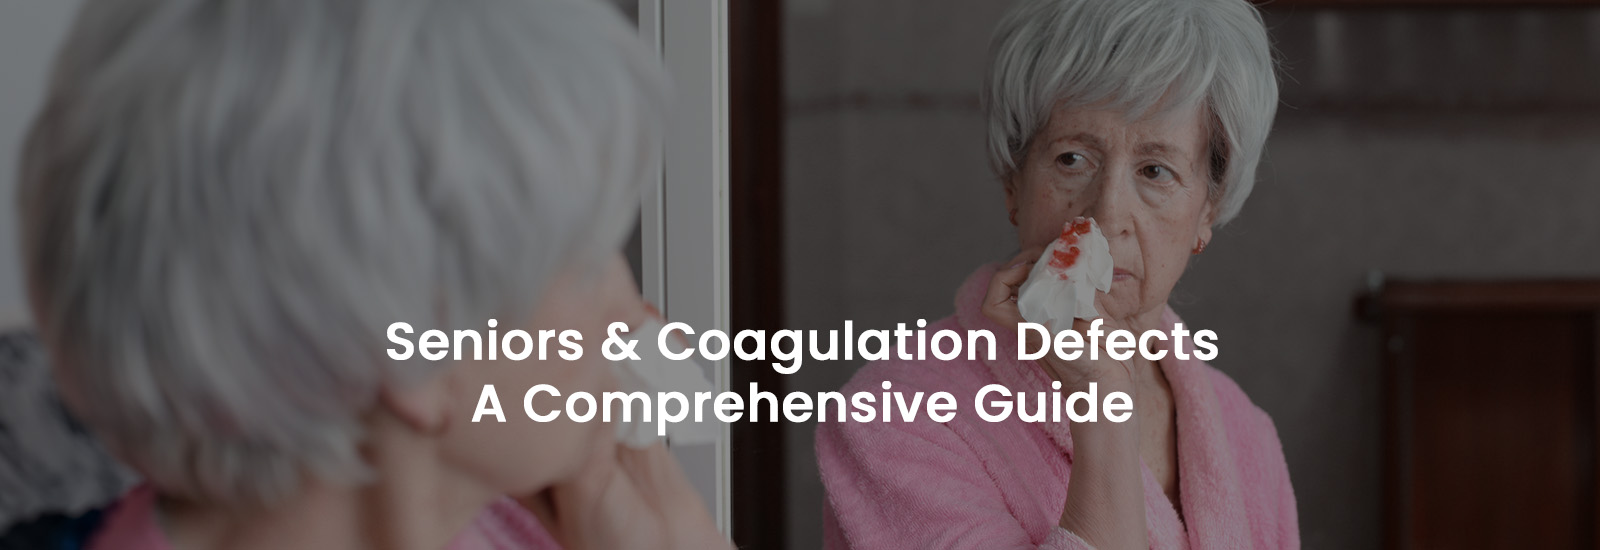 Seniors & Coagulation Defects a Comprehensive Guide | Banner Image